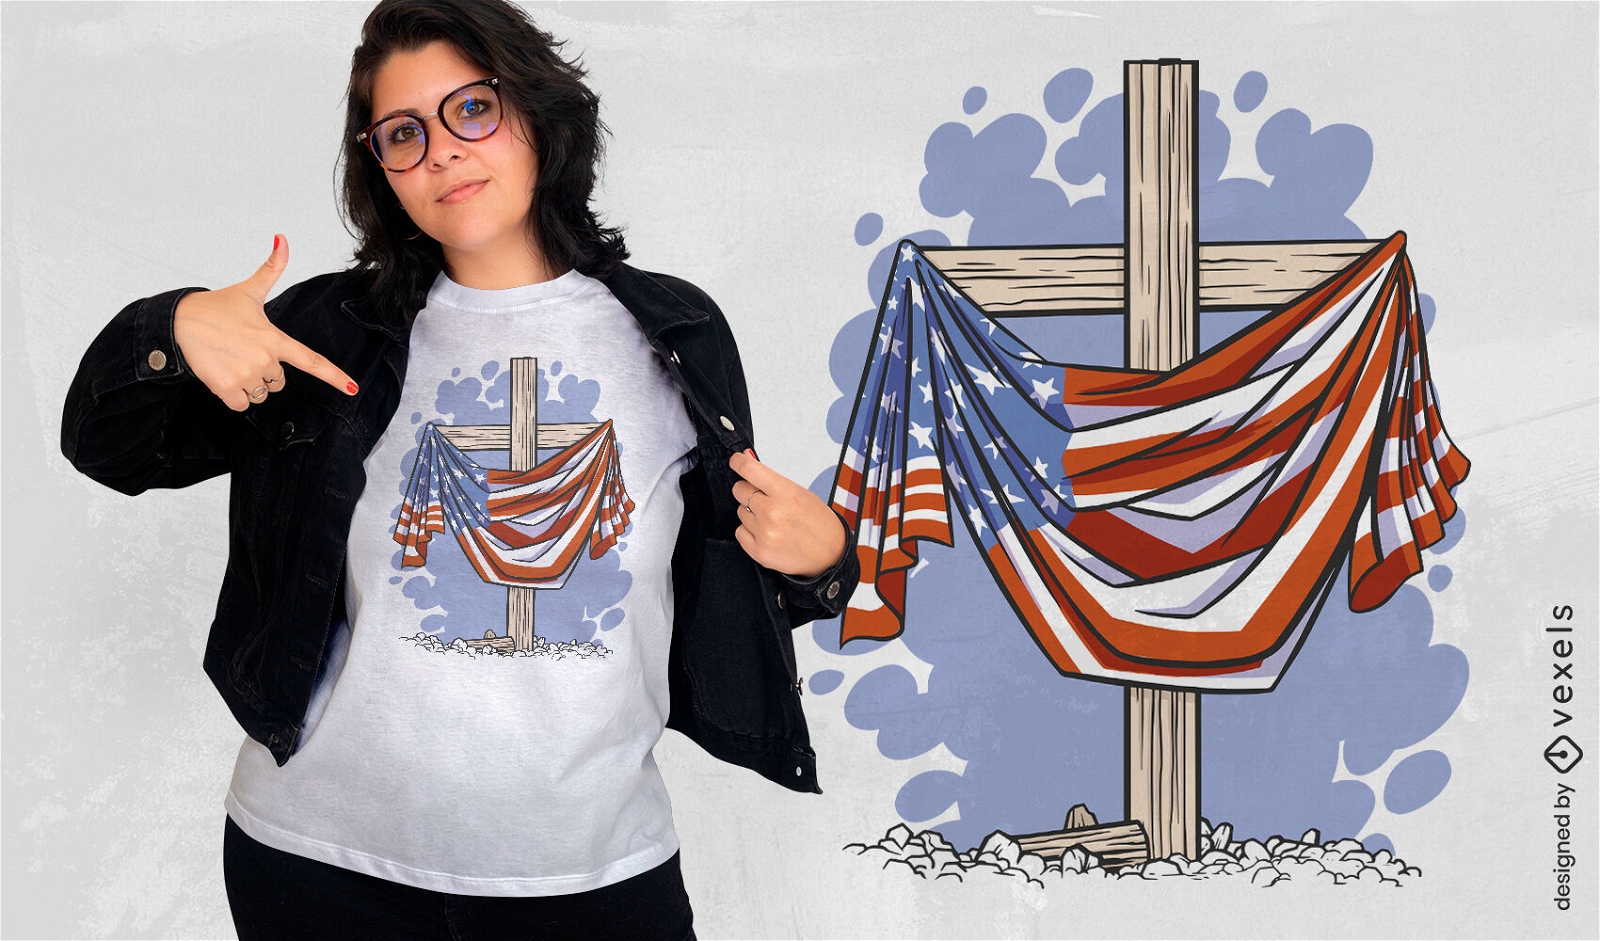 Holzkreuz und USA-Flaggen-T-Shirt-Design